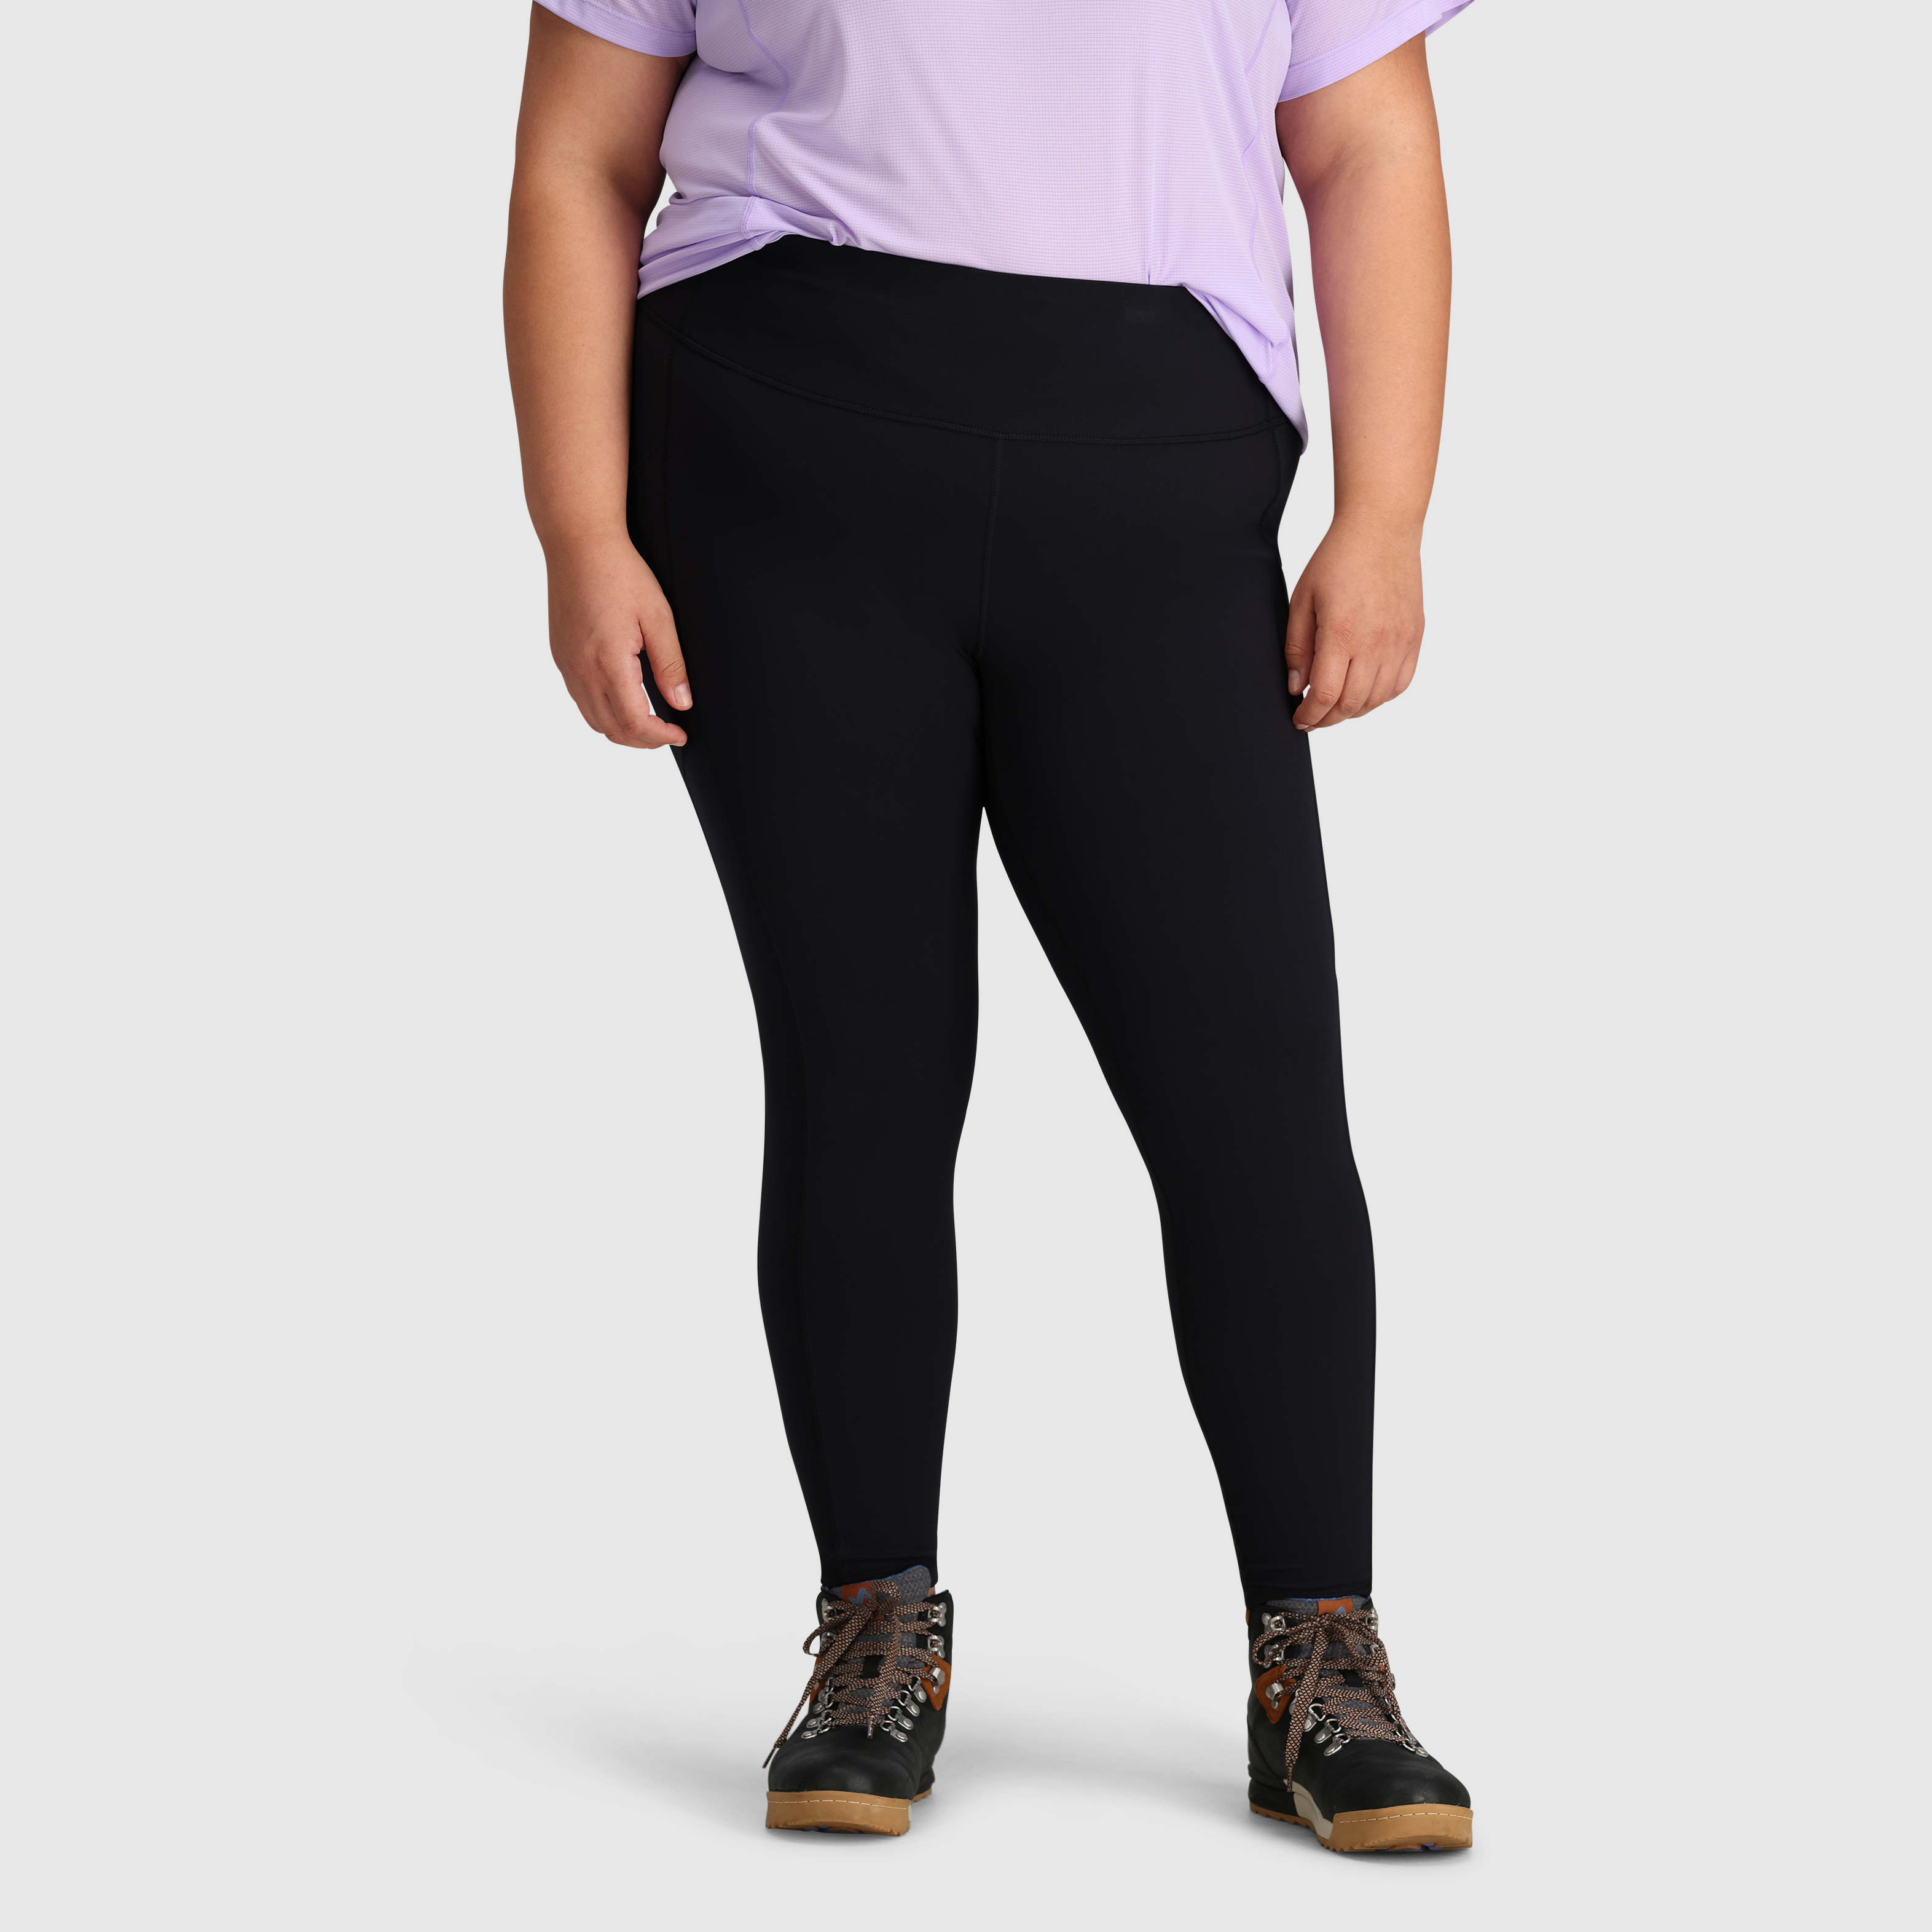 3.Plus Size Leggings Sport Yoga Pants Women with Pocket Girl Gym Leggings  Women Tummy Control